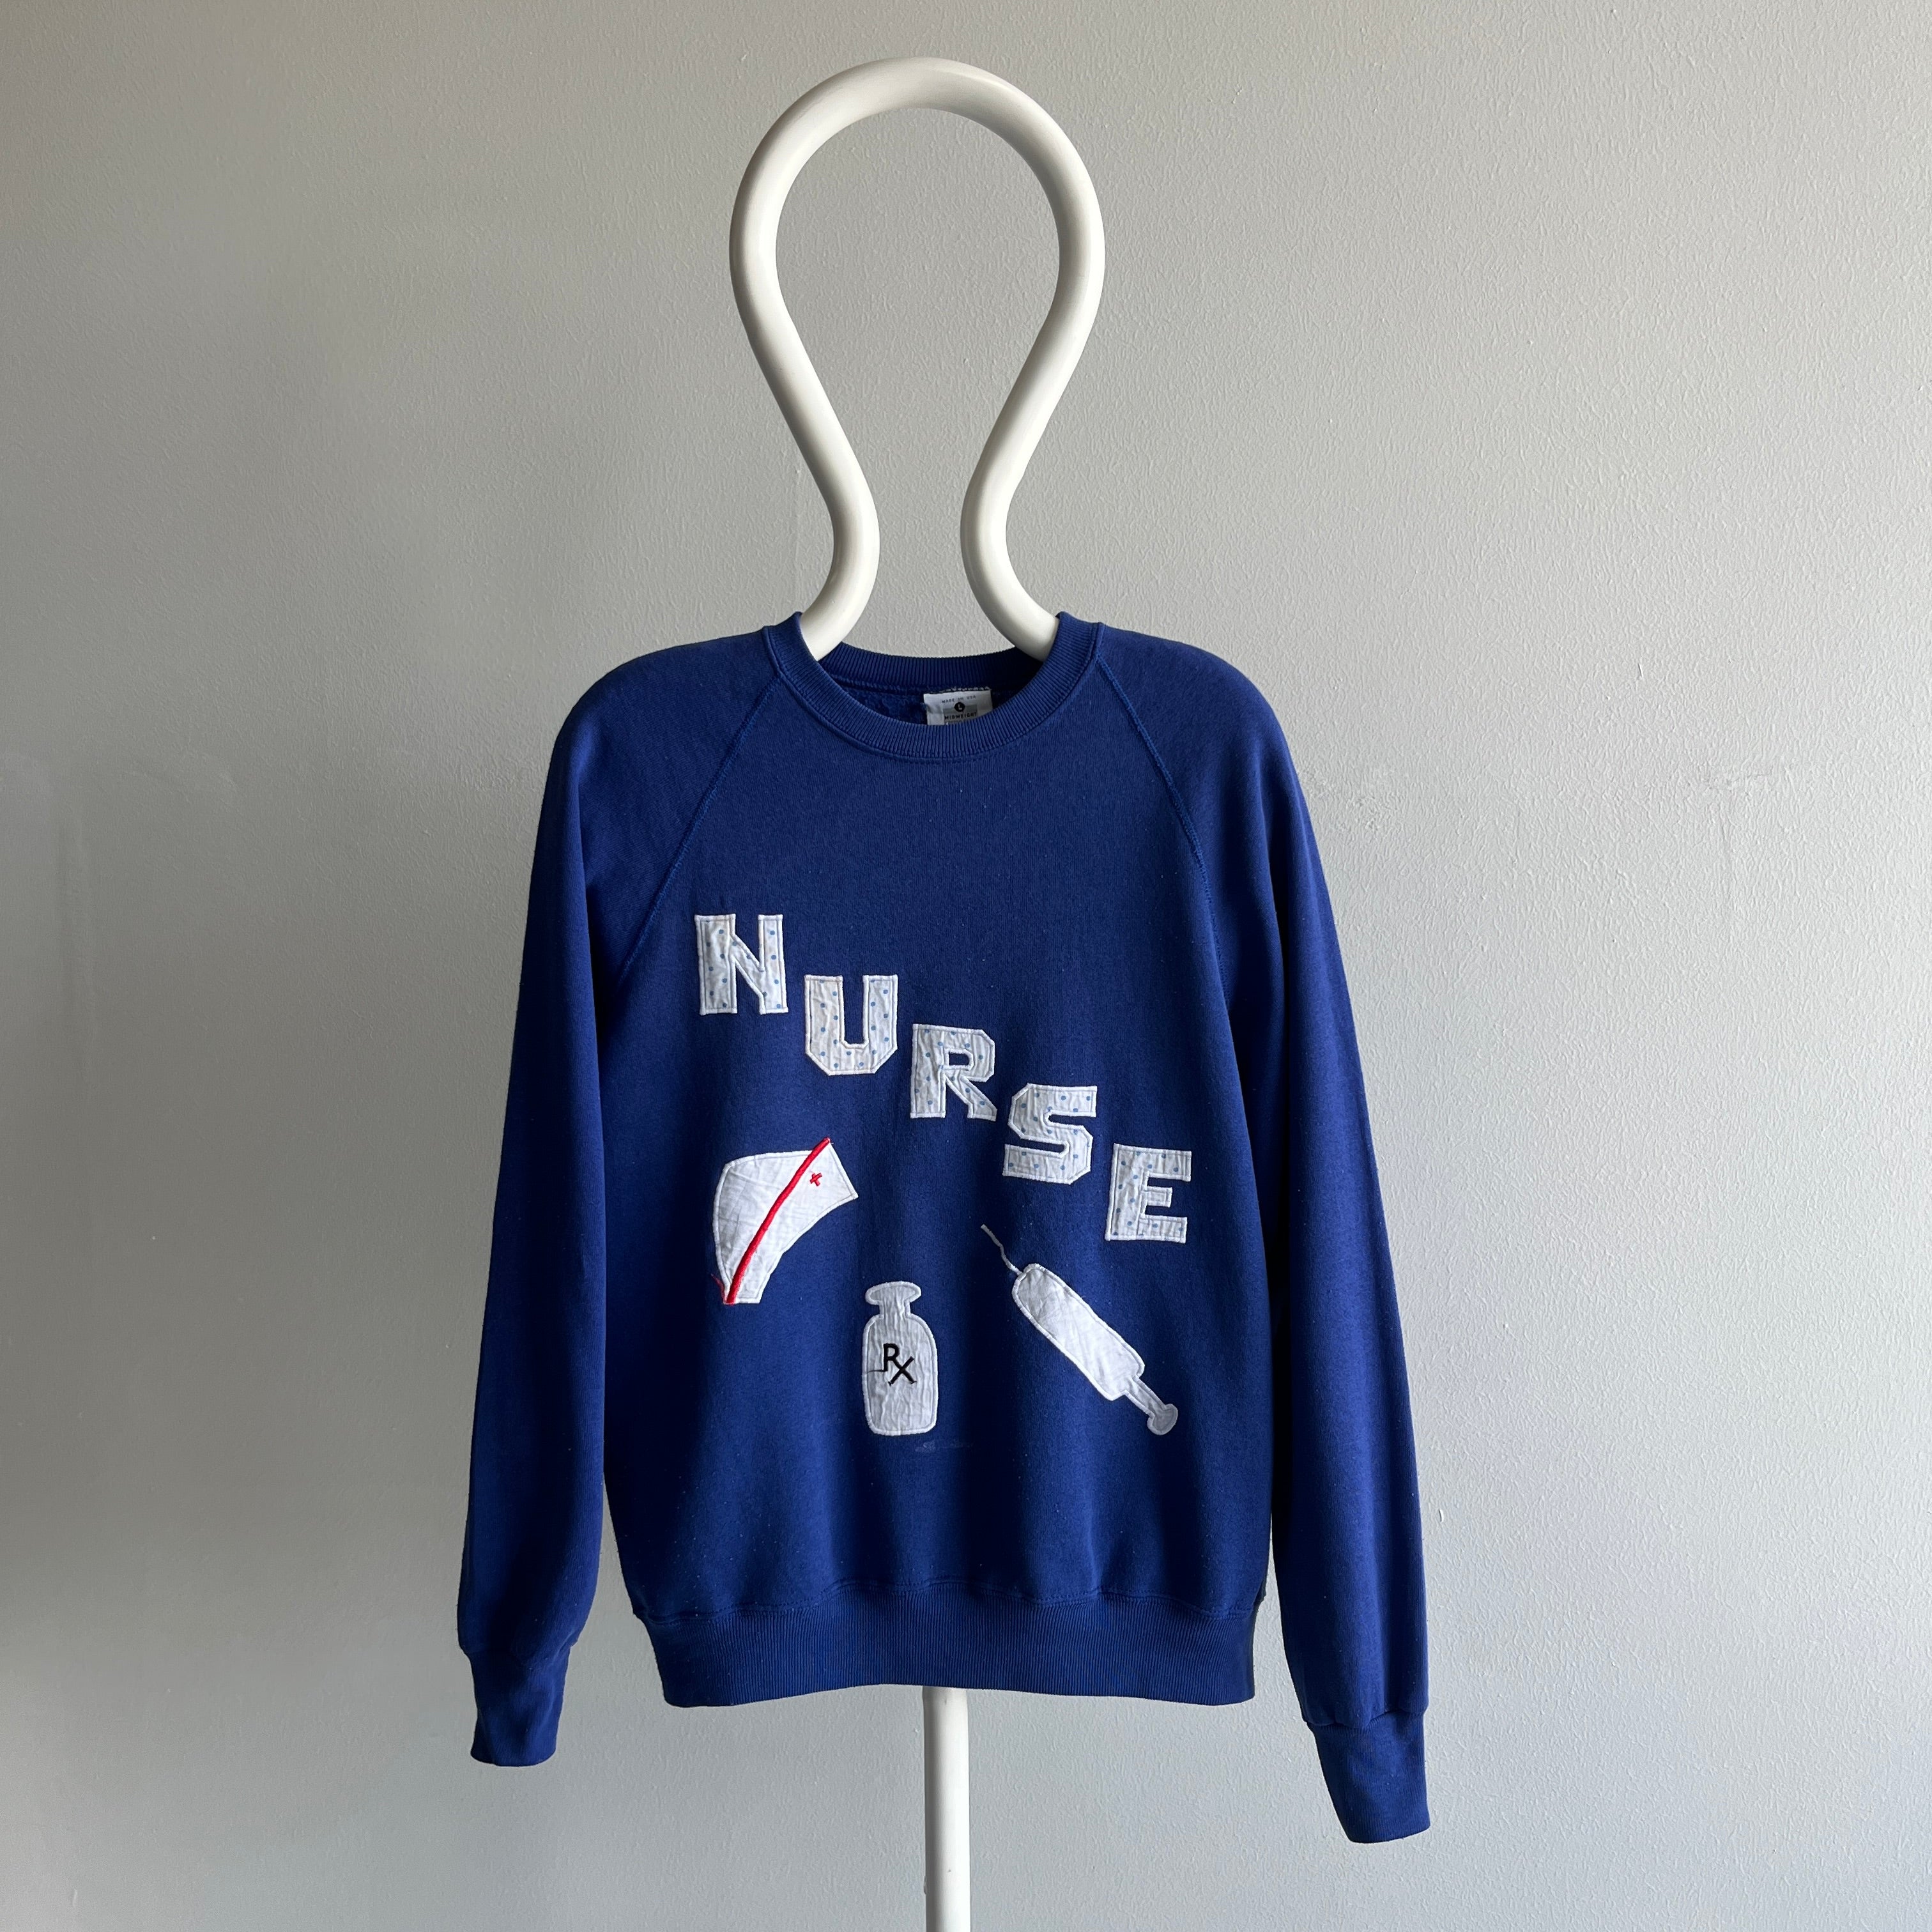 1980s DIY Nurse Sweatshirt - Oh My